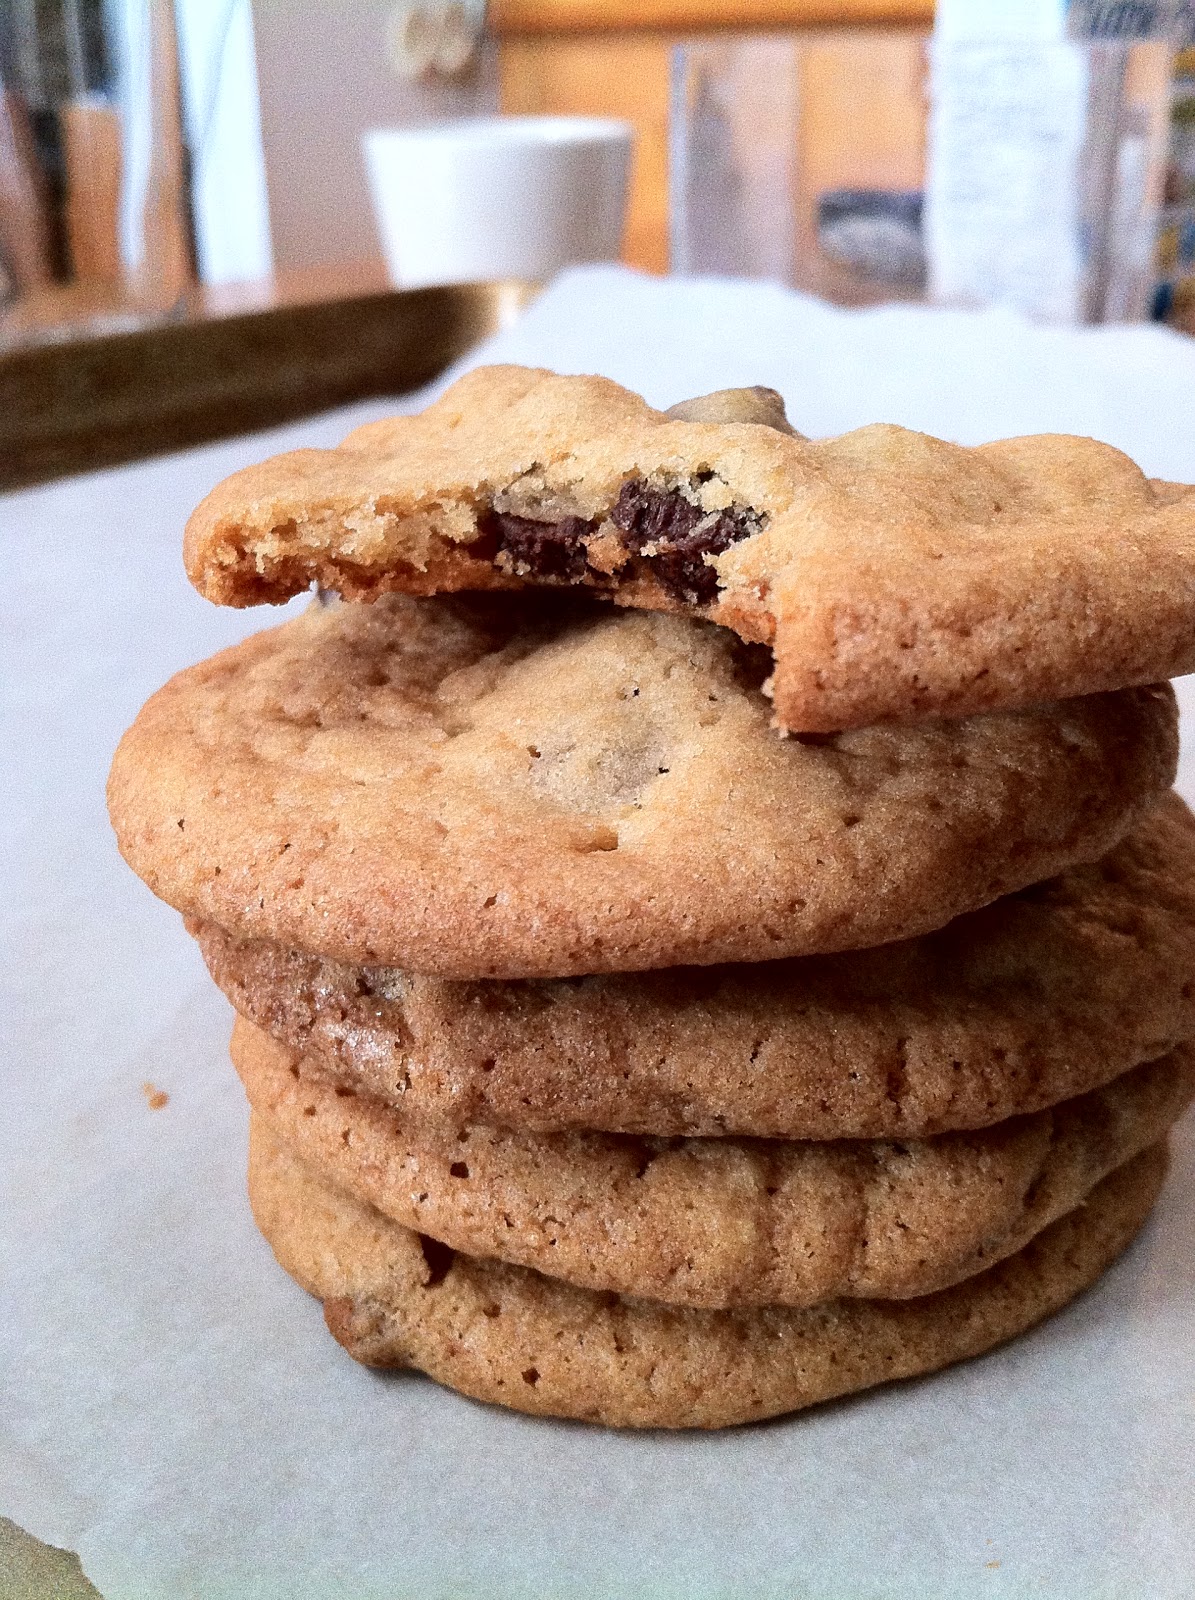 Tramie's Kitchen: THE best cinnamon chocolate chip cookies